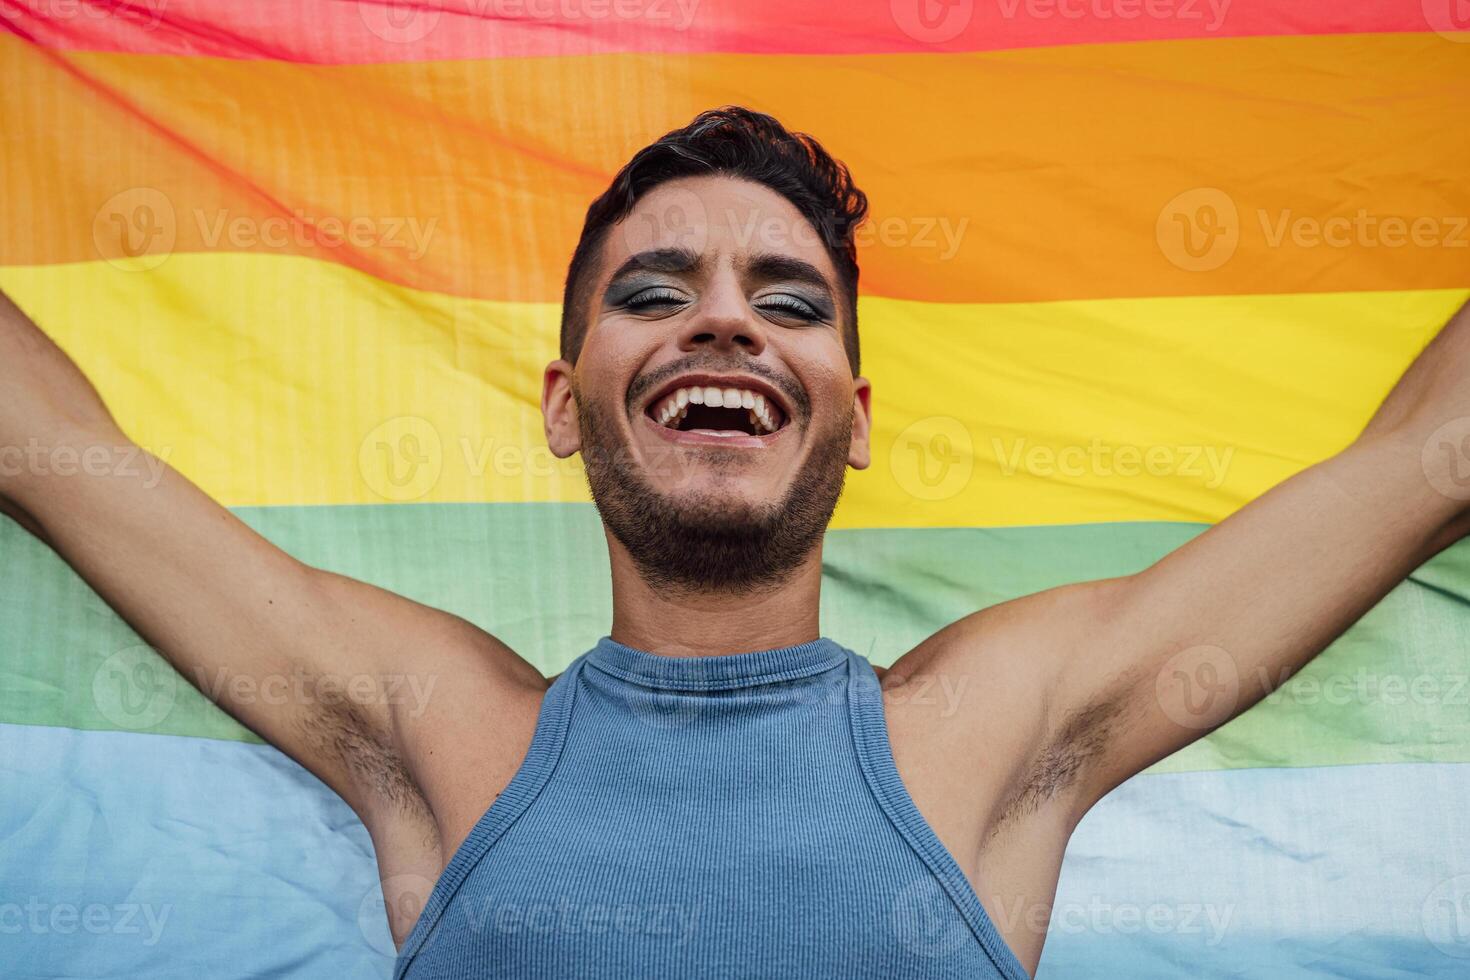 Happy homosexual man celebrating gay pride holding rainbow flag symbol of LGBTQ community photo